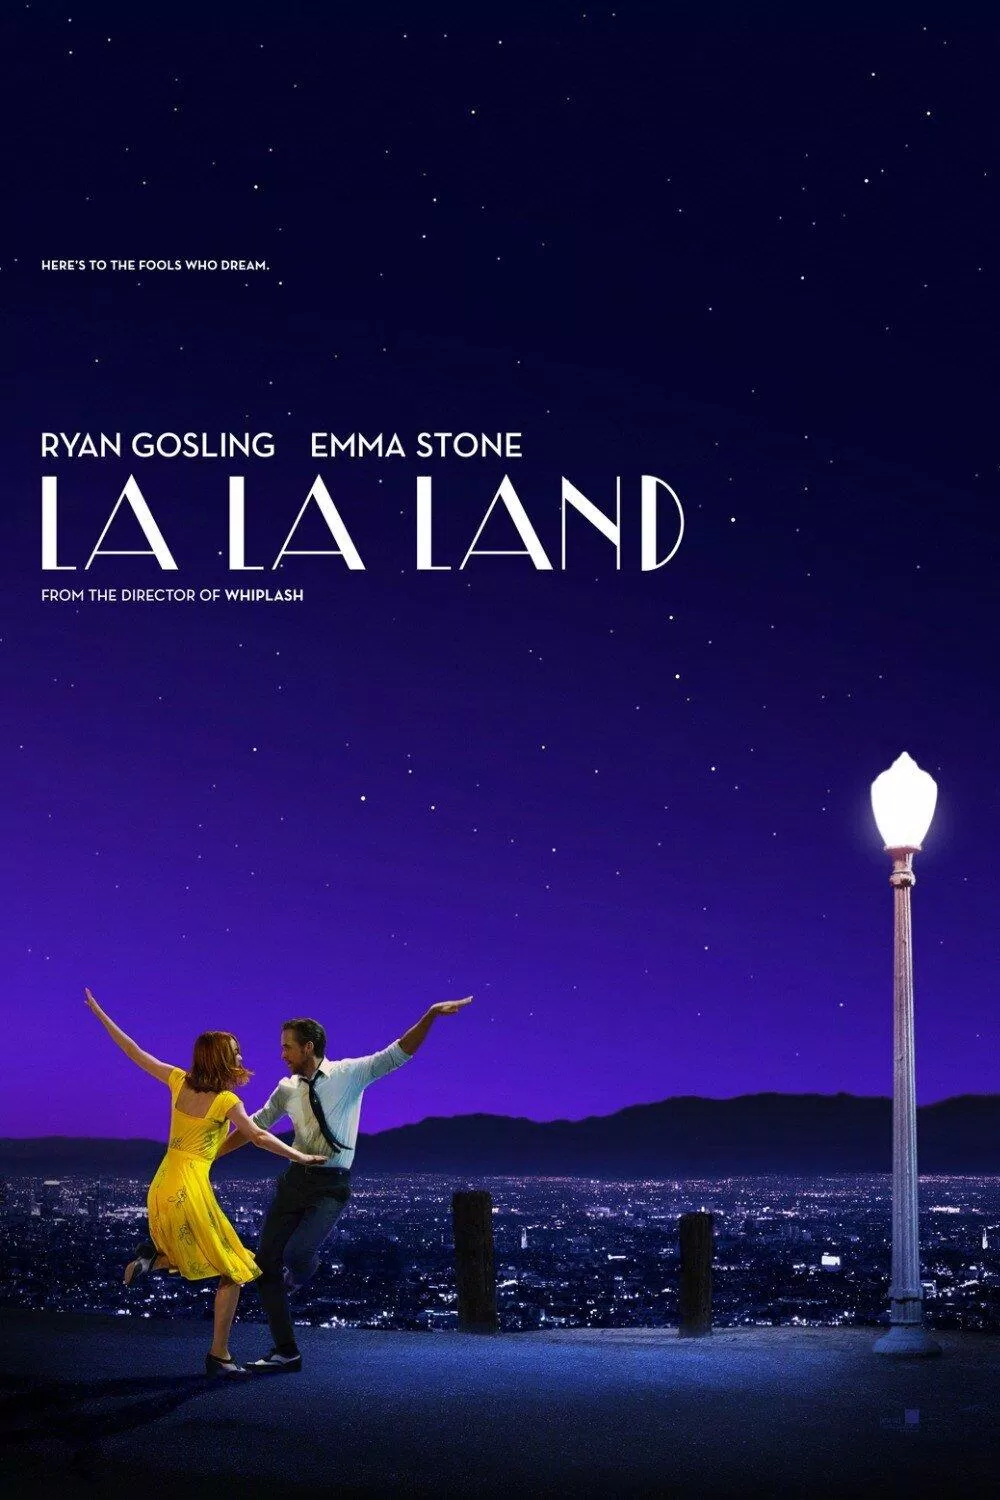 Poster phim Lalaland. (Nguồn: Internet)